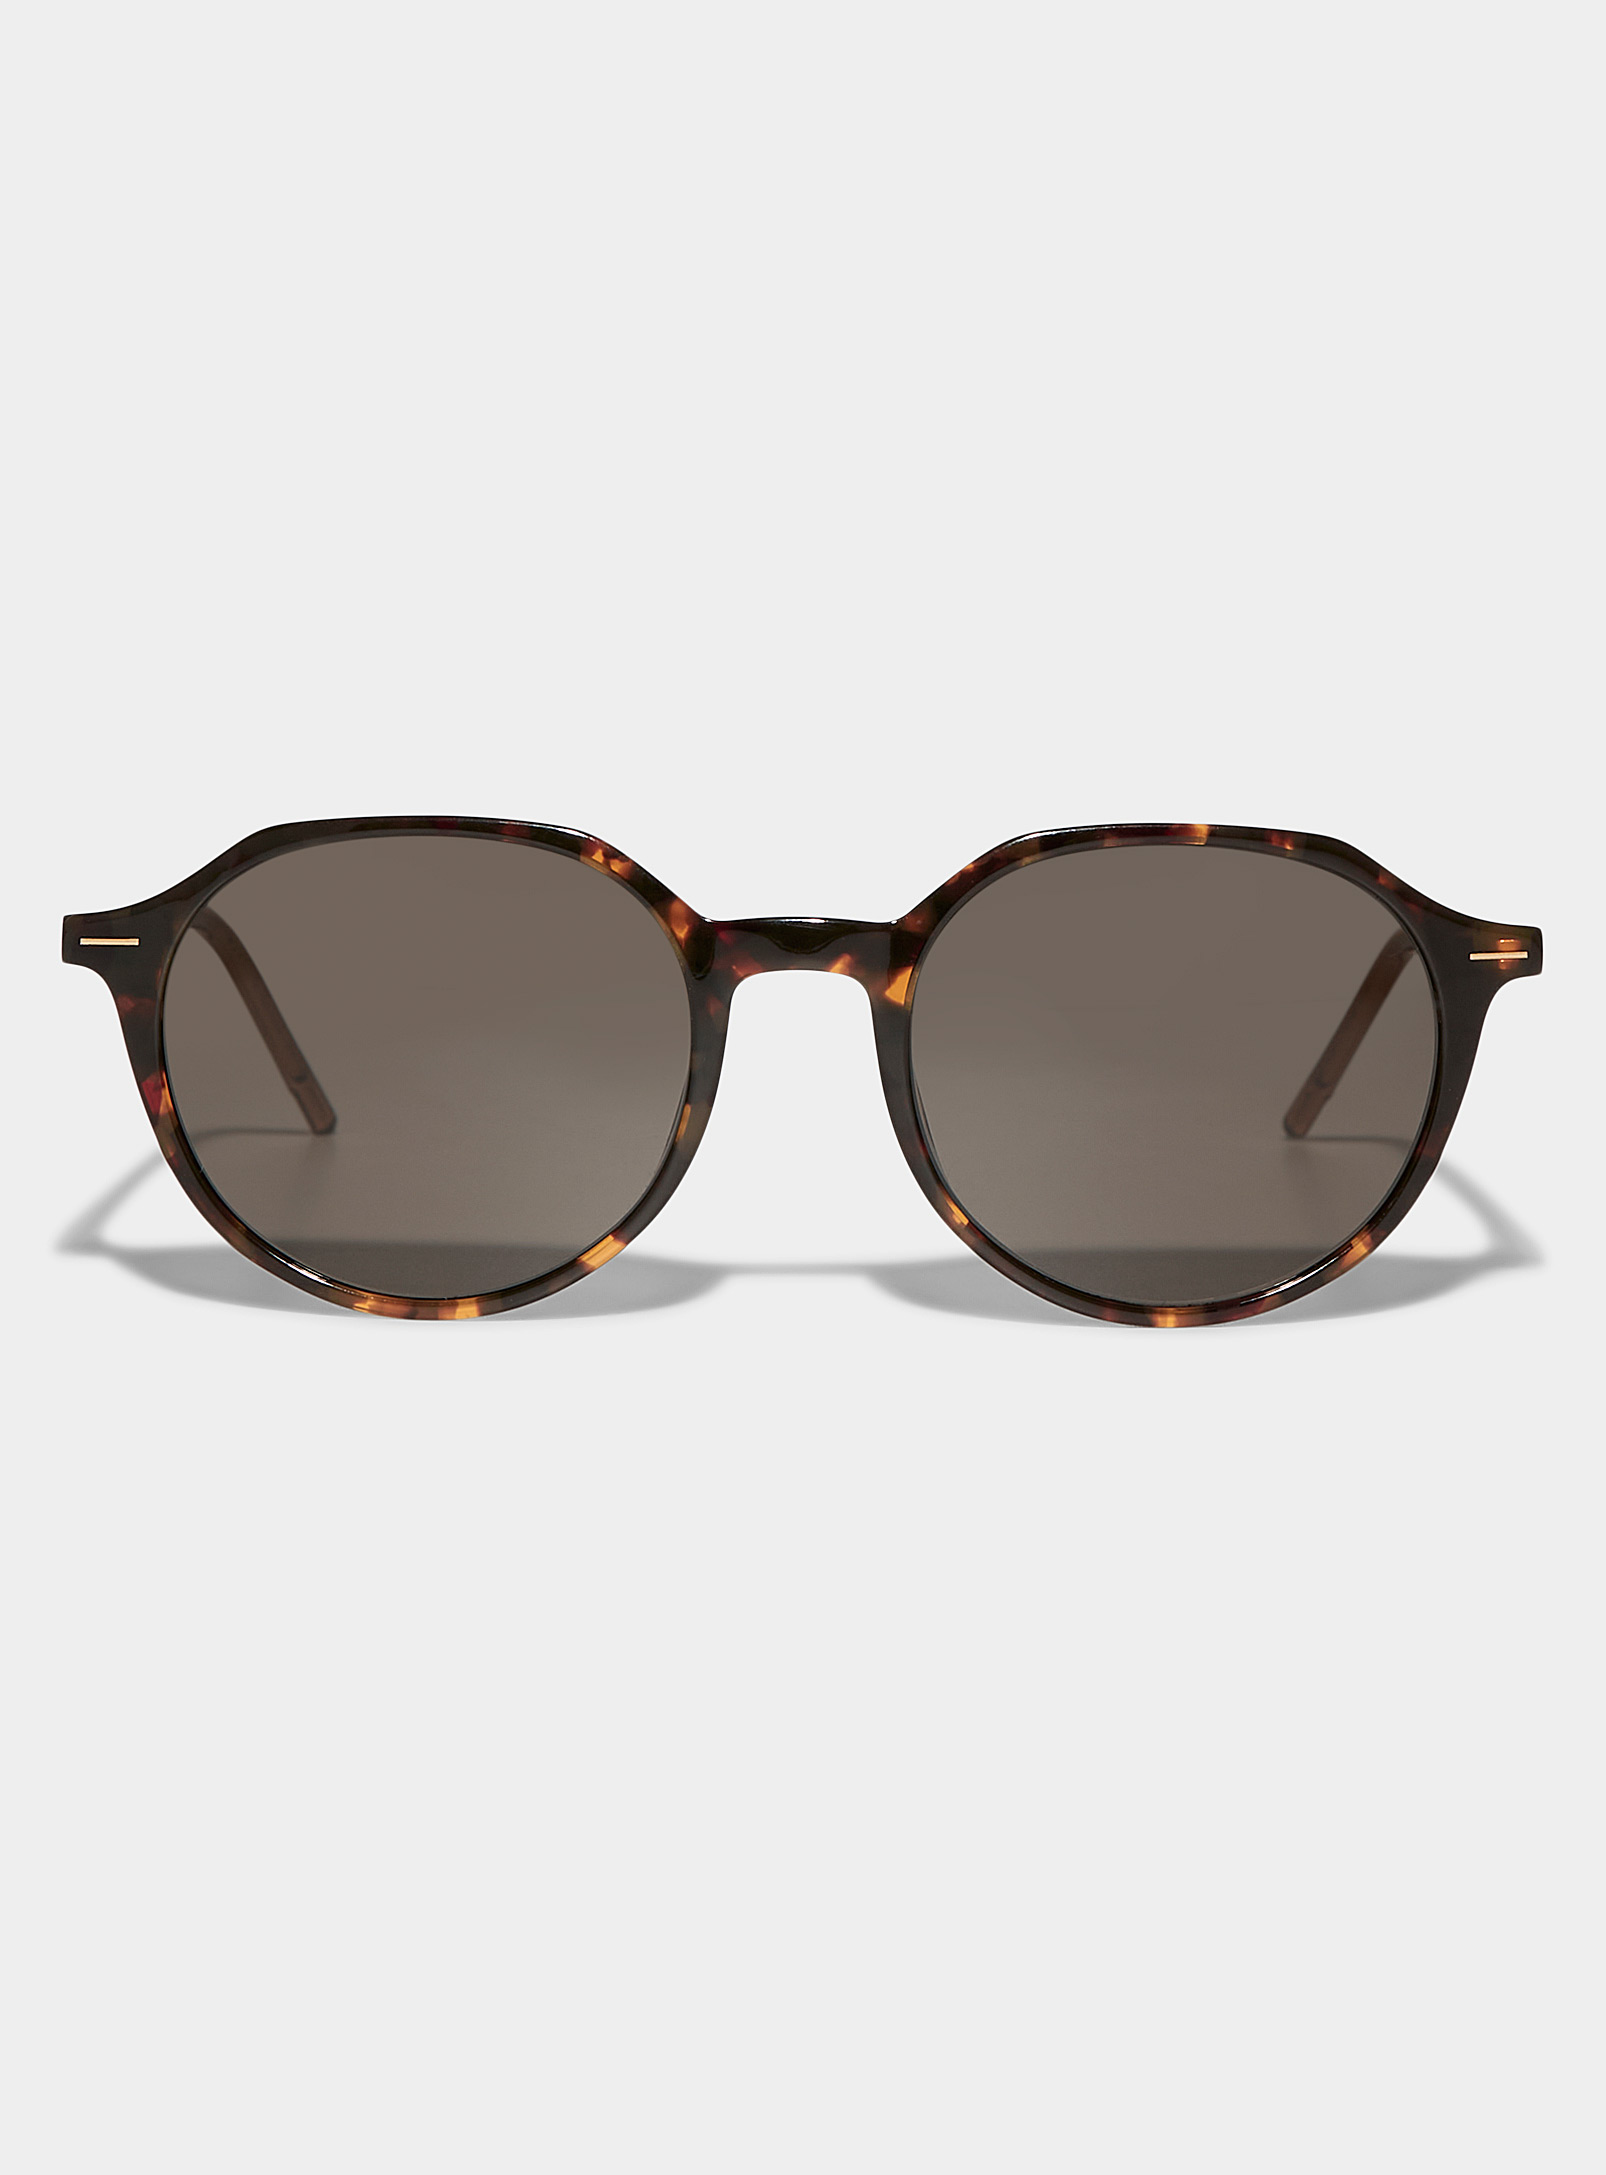 Hugo Boss Flecked Round Sunglasses In Light Brown